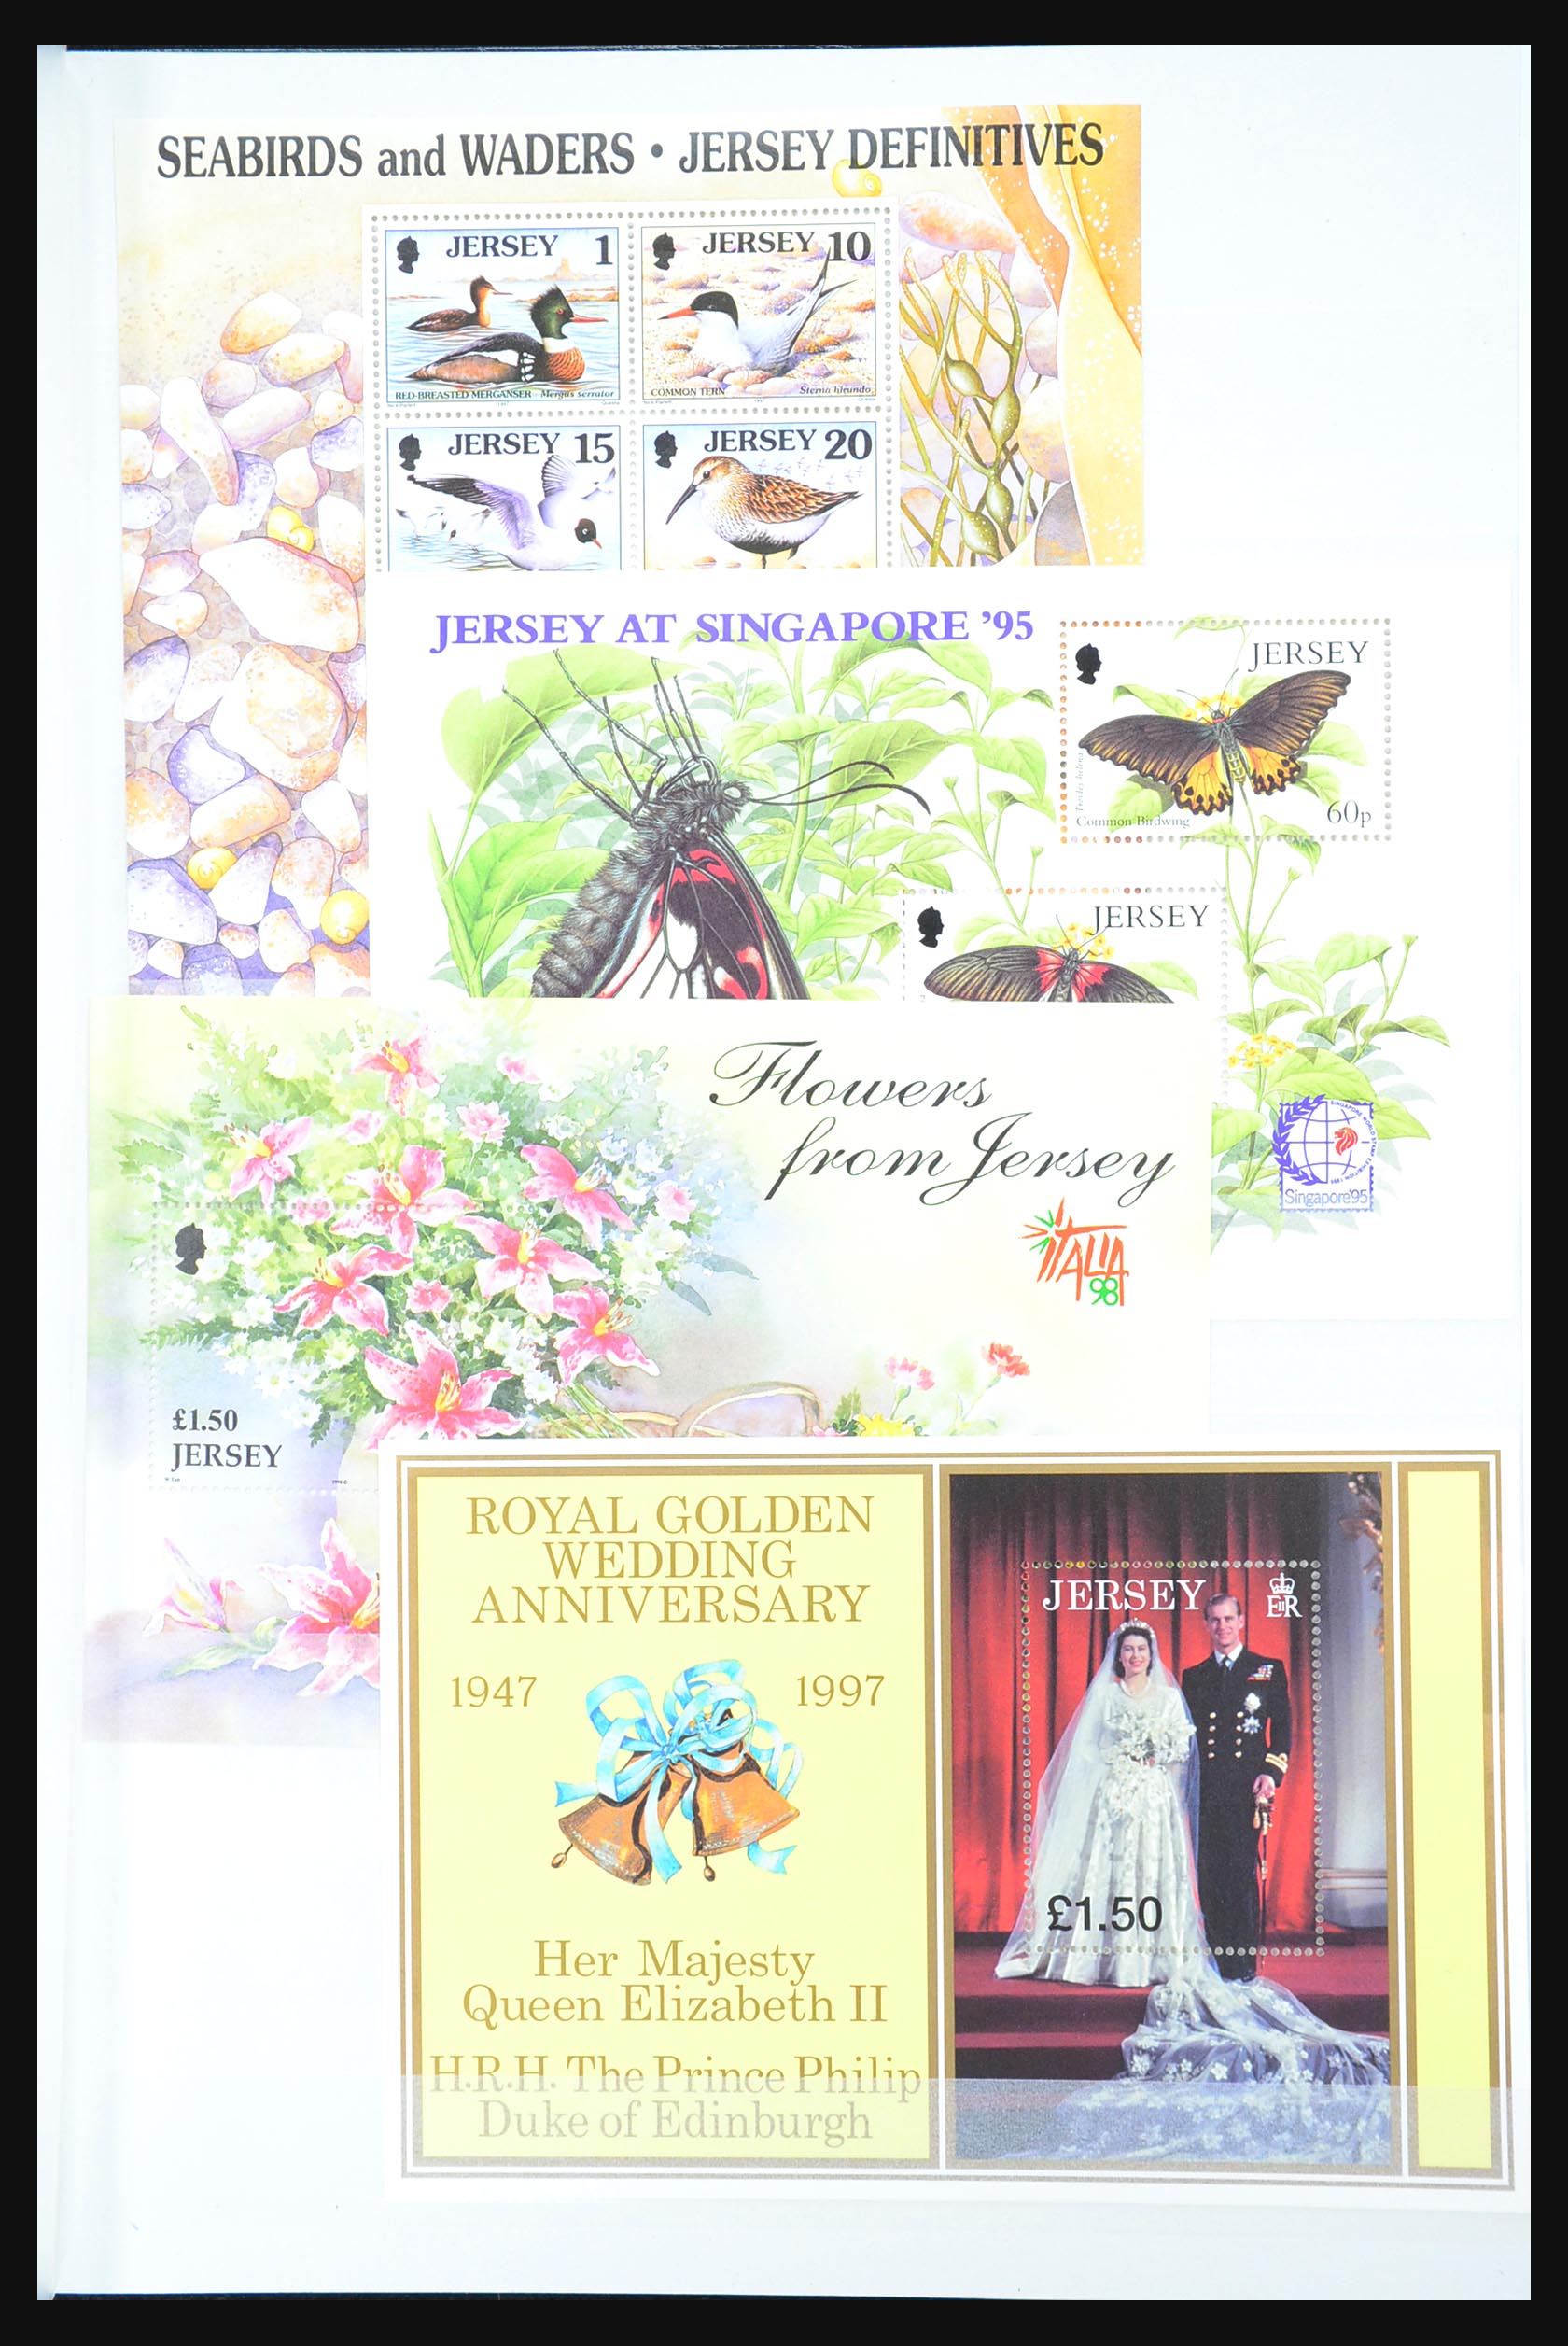 31249 041 - 31249 Channel Islands souvenir sheets and sheetlets 1978-1997.